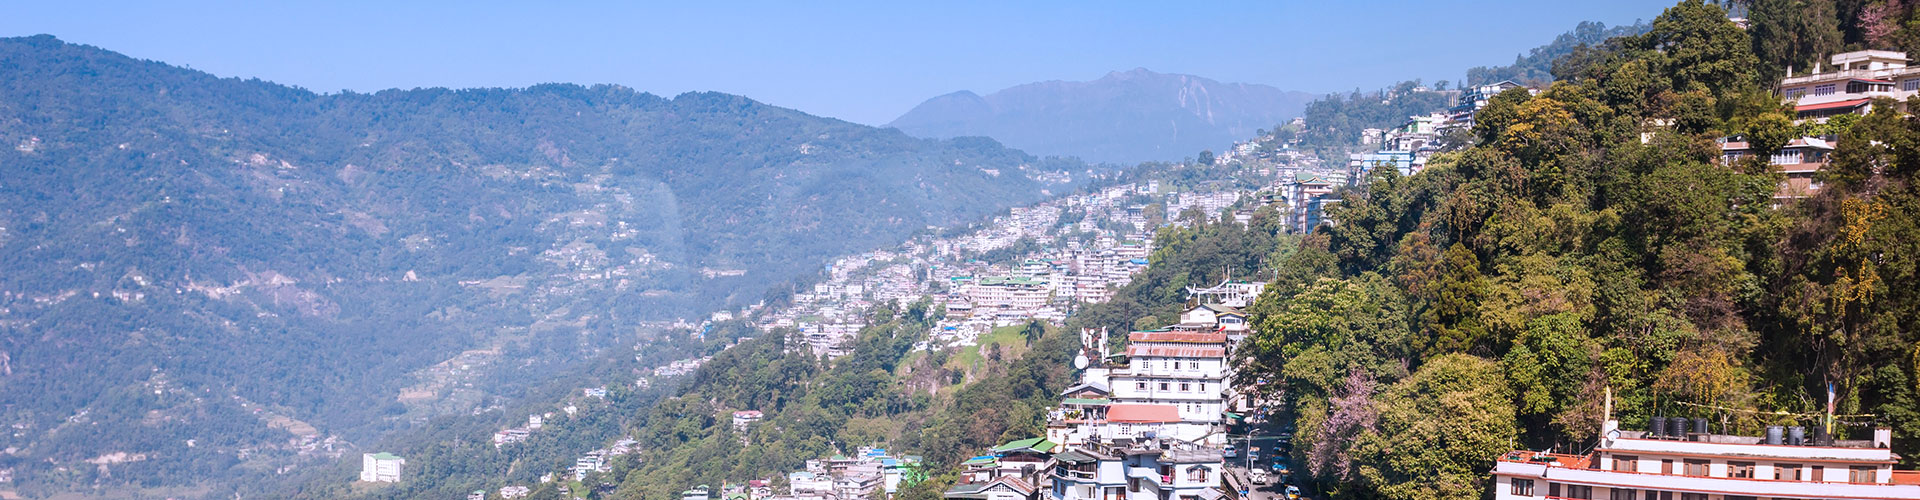 Gangtok - Beautiful Capital City of Sikkim